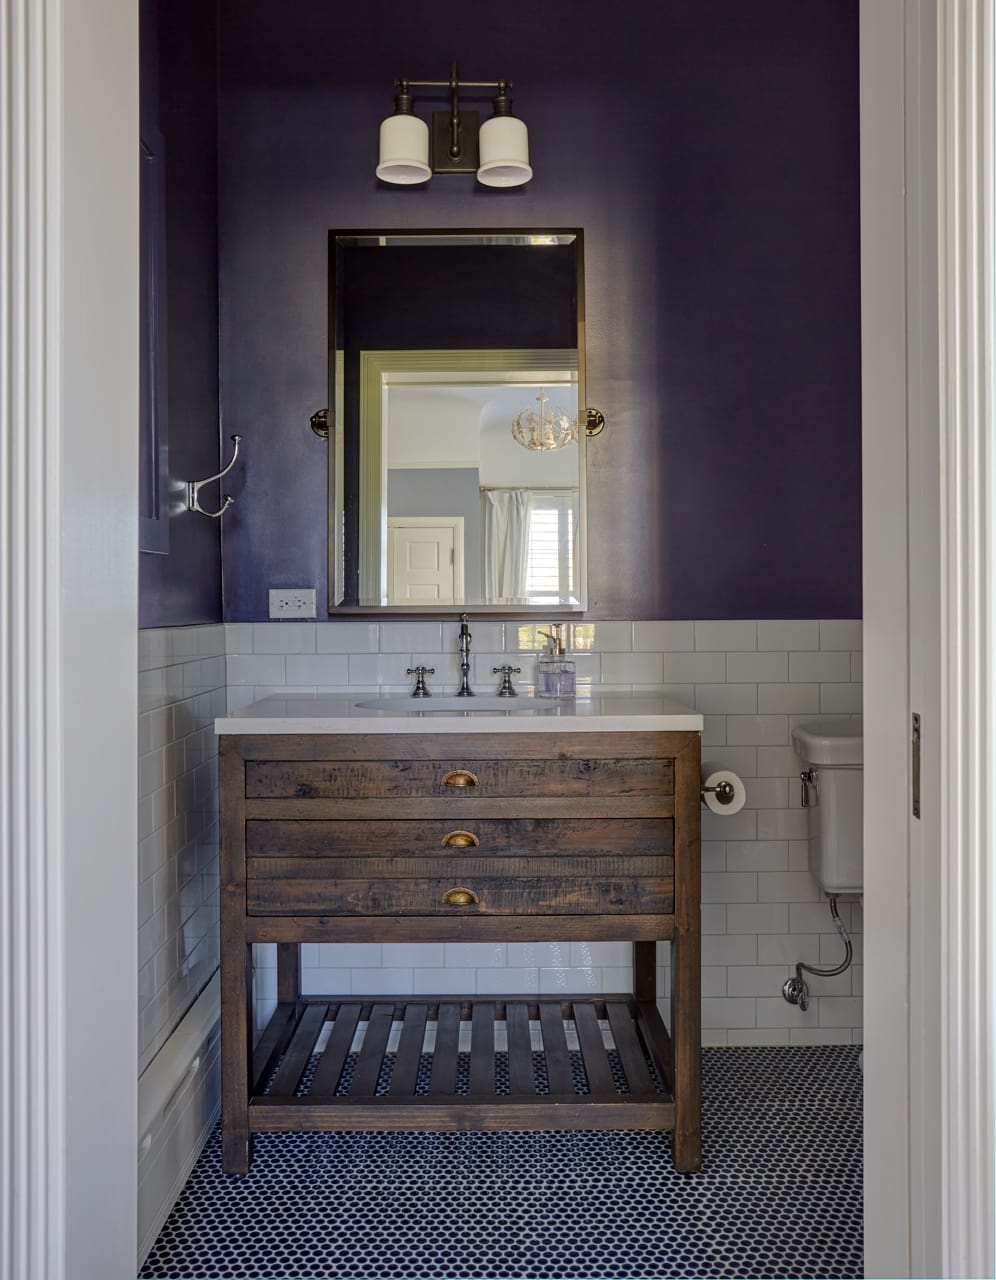 Small bathroom remodeling, minimalistic design and dark wall